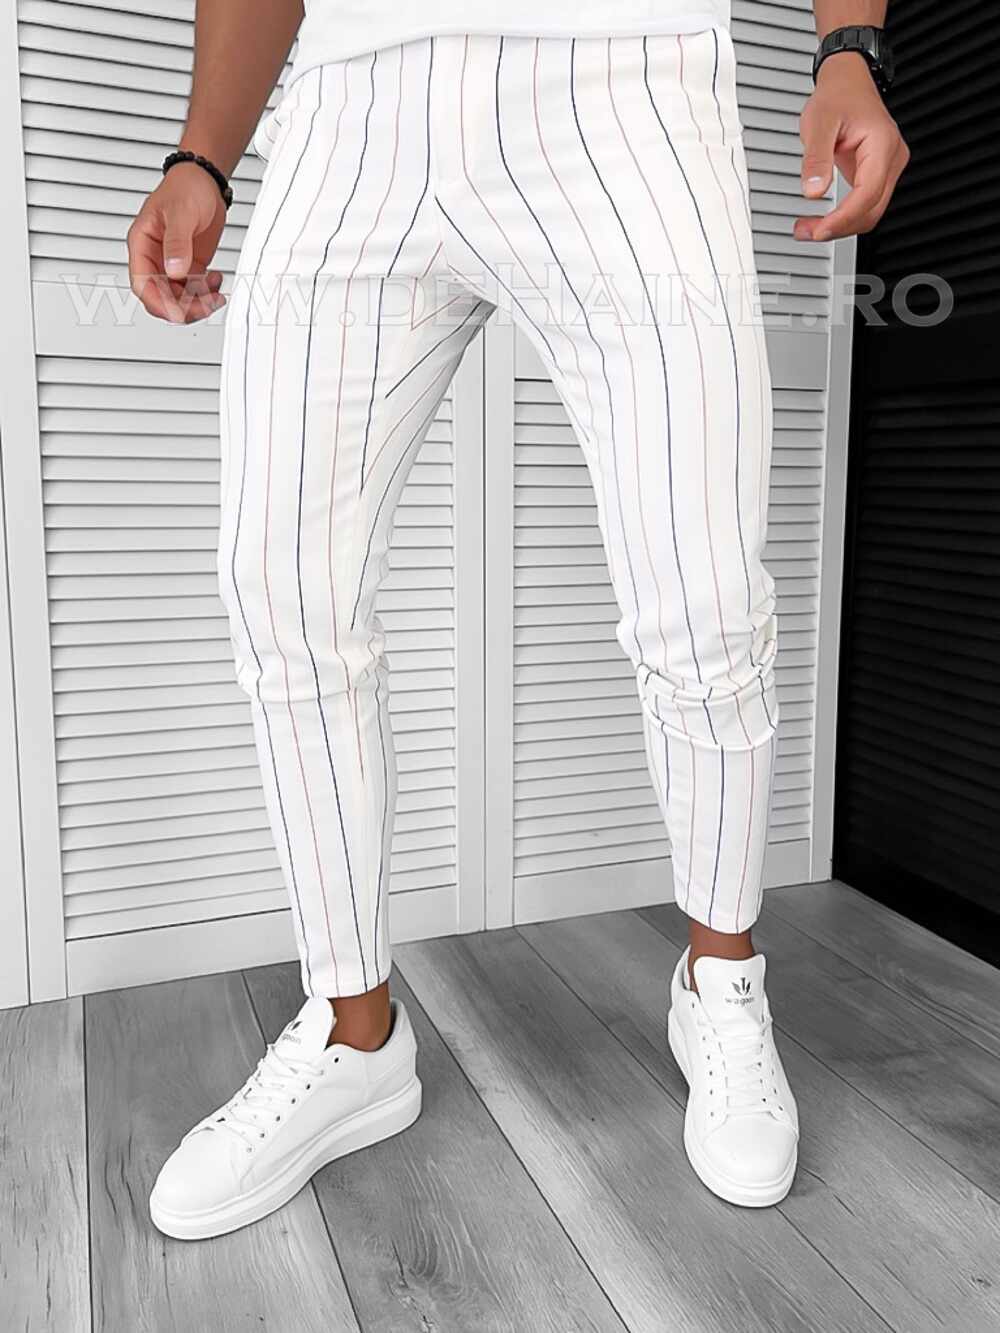 Pantaloni barbati casual regular fit in dungi B1730 4-4 e*